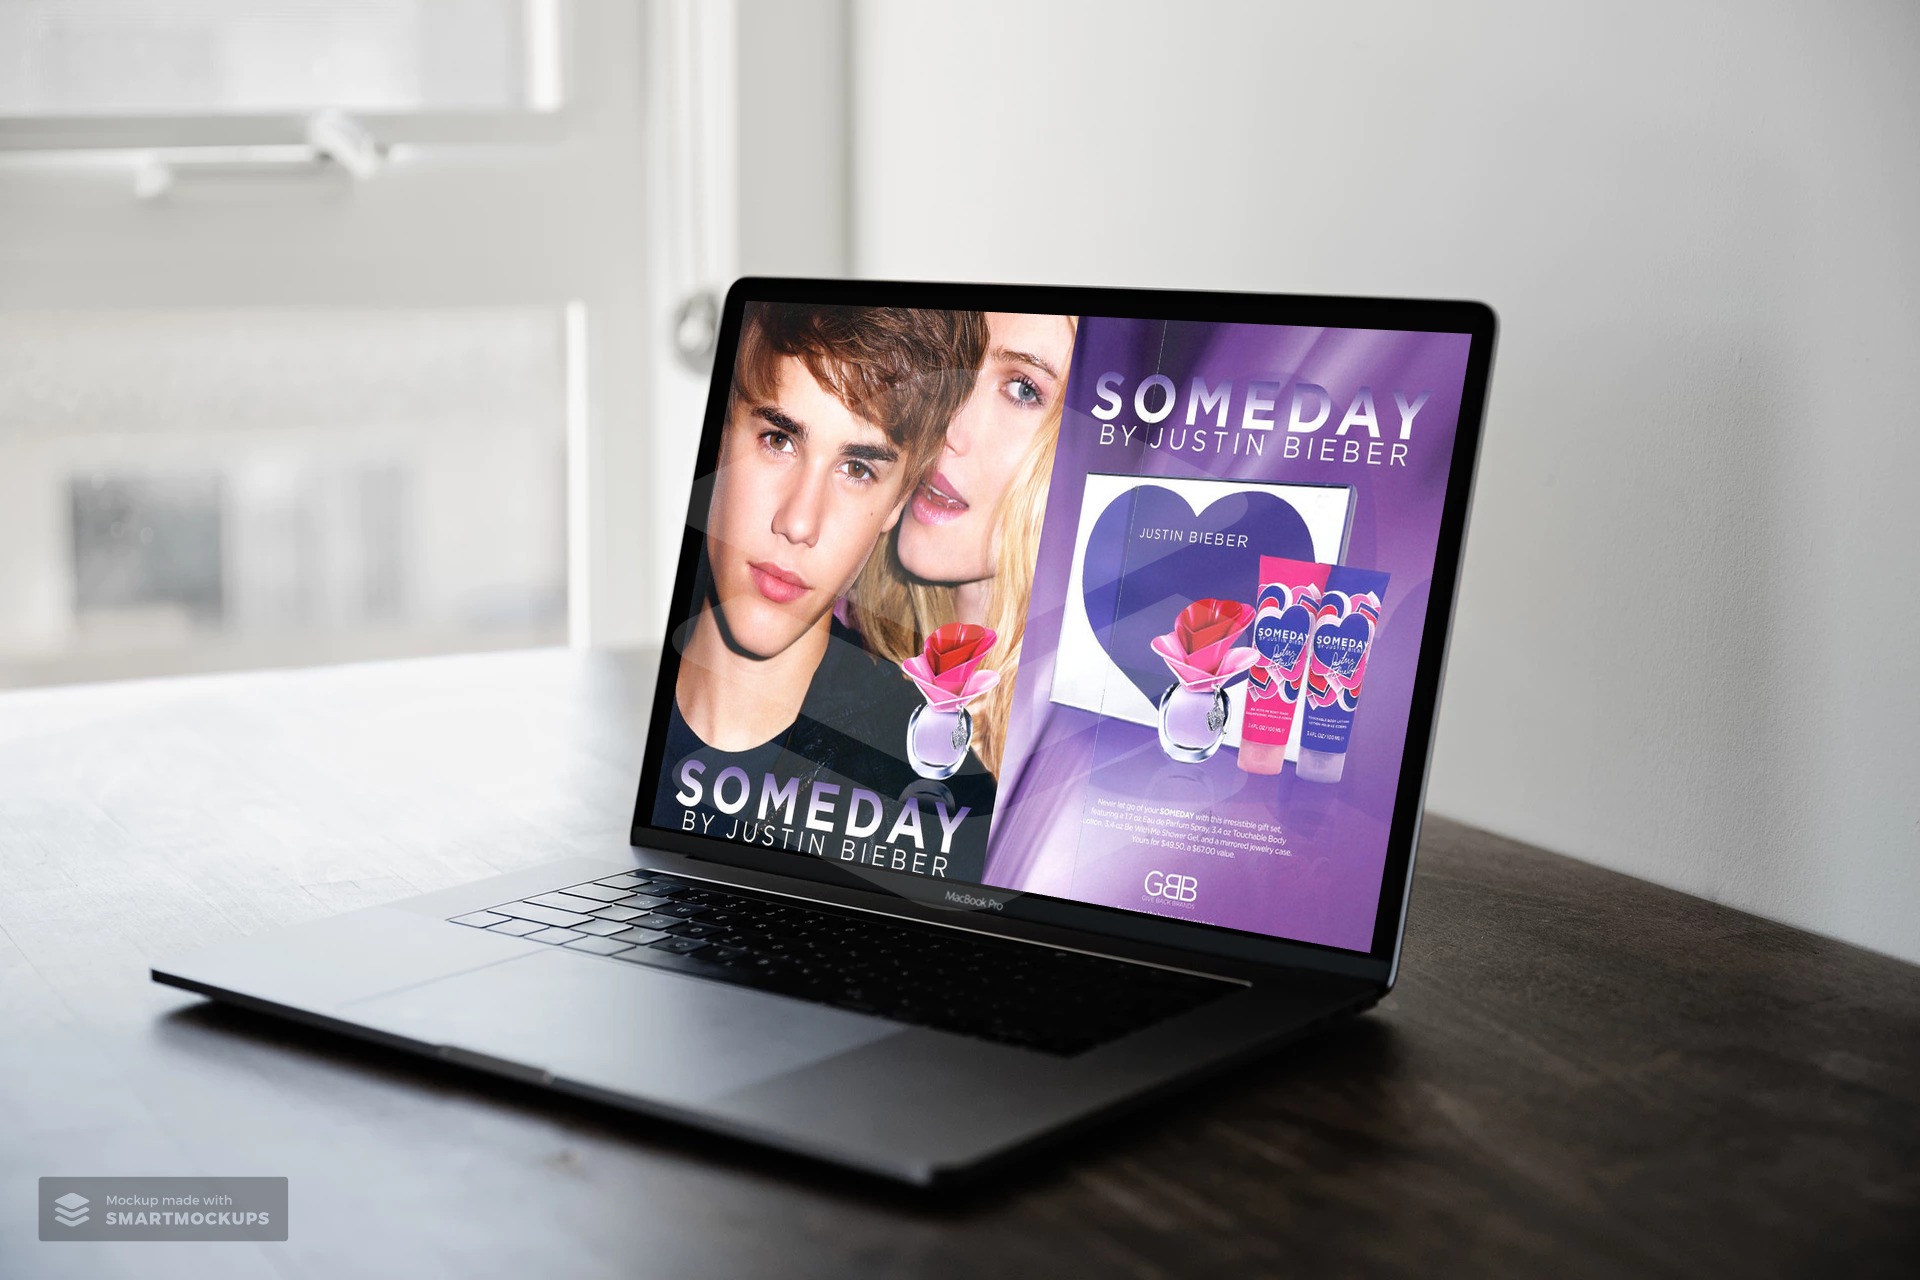 Justin Bieber - Someday